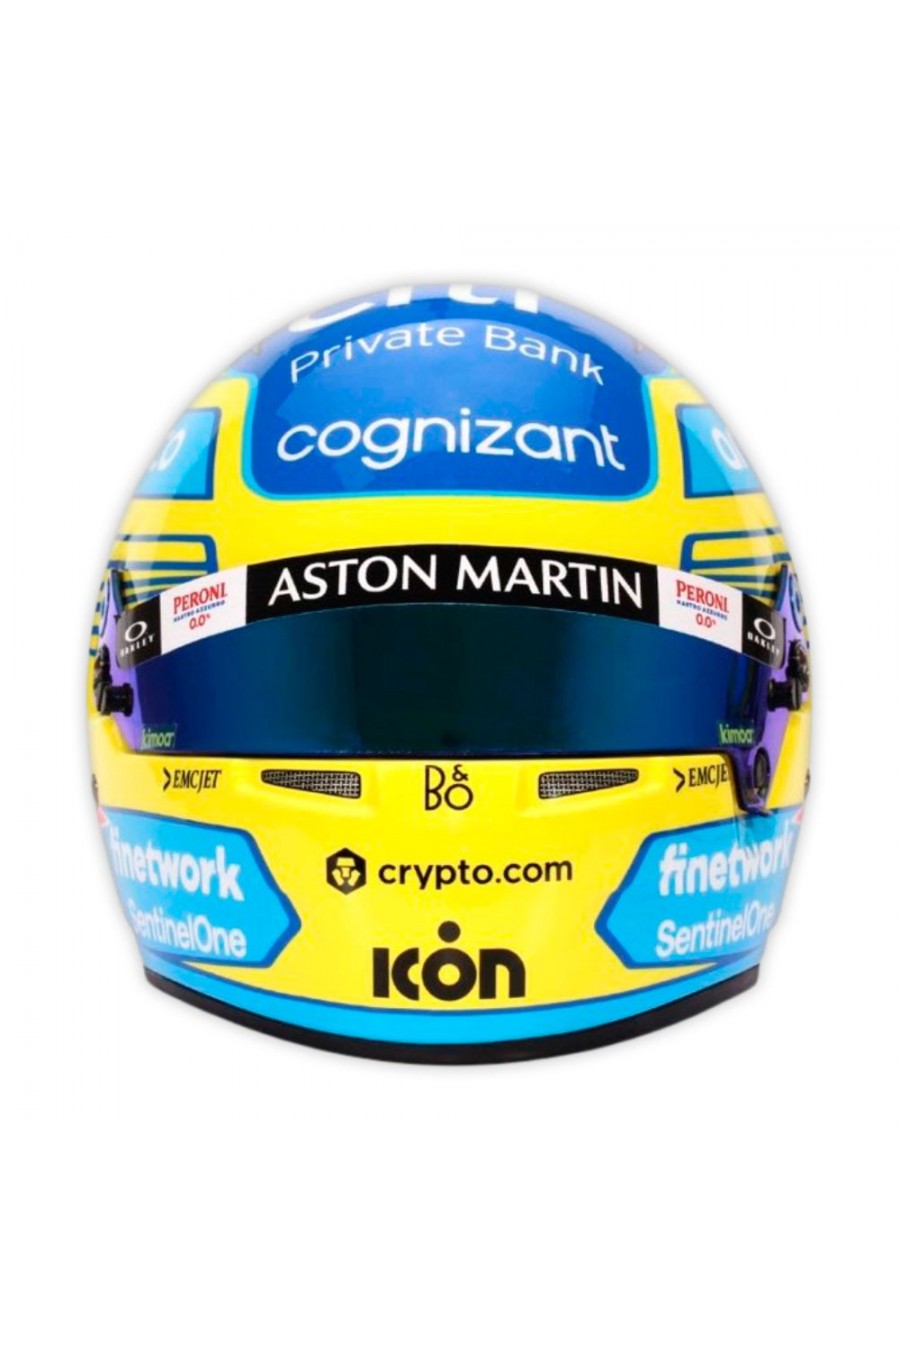 Casco Mini Helmet 1:2 Fernando Alonso 'Aston Martin 2023'